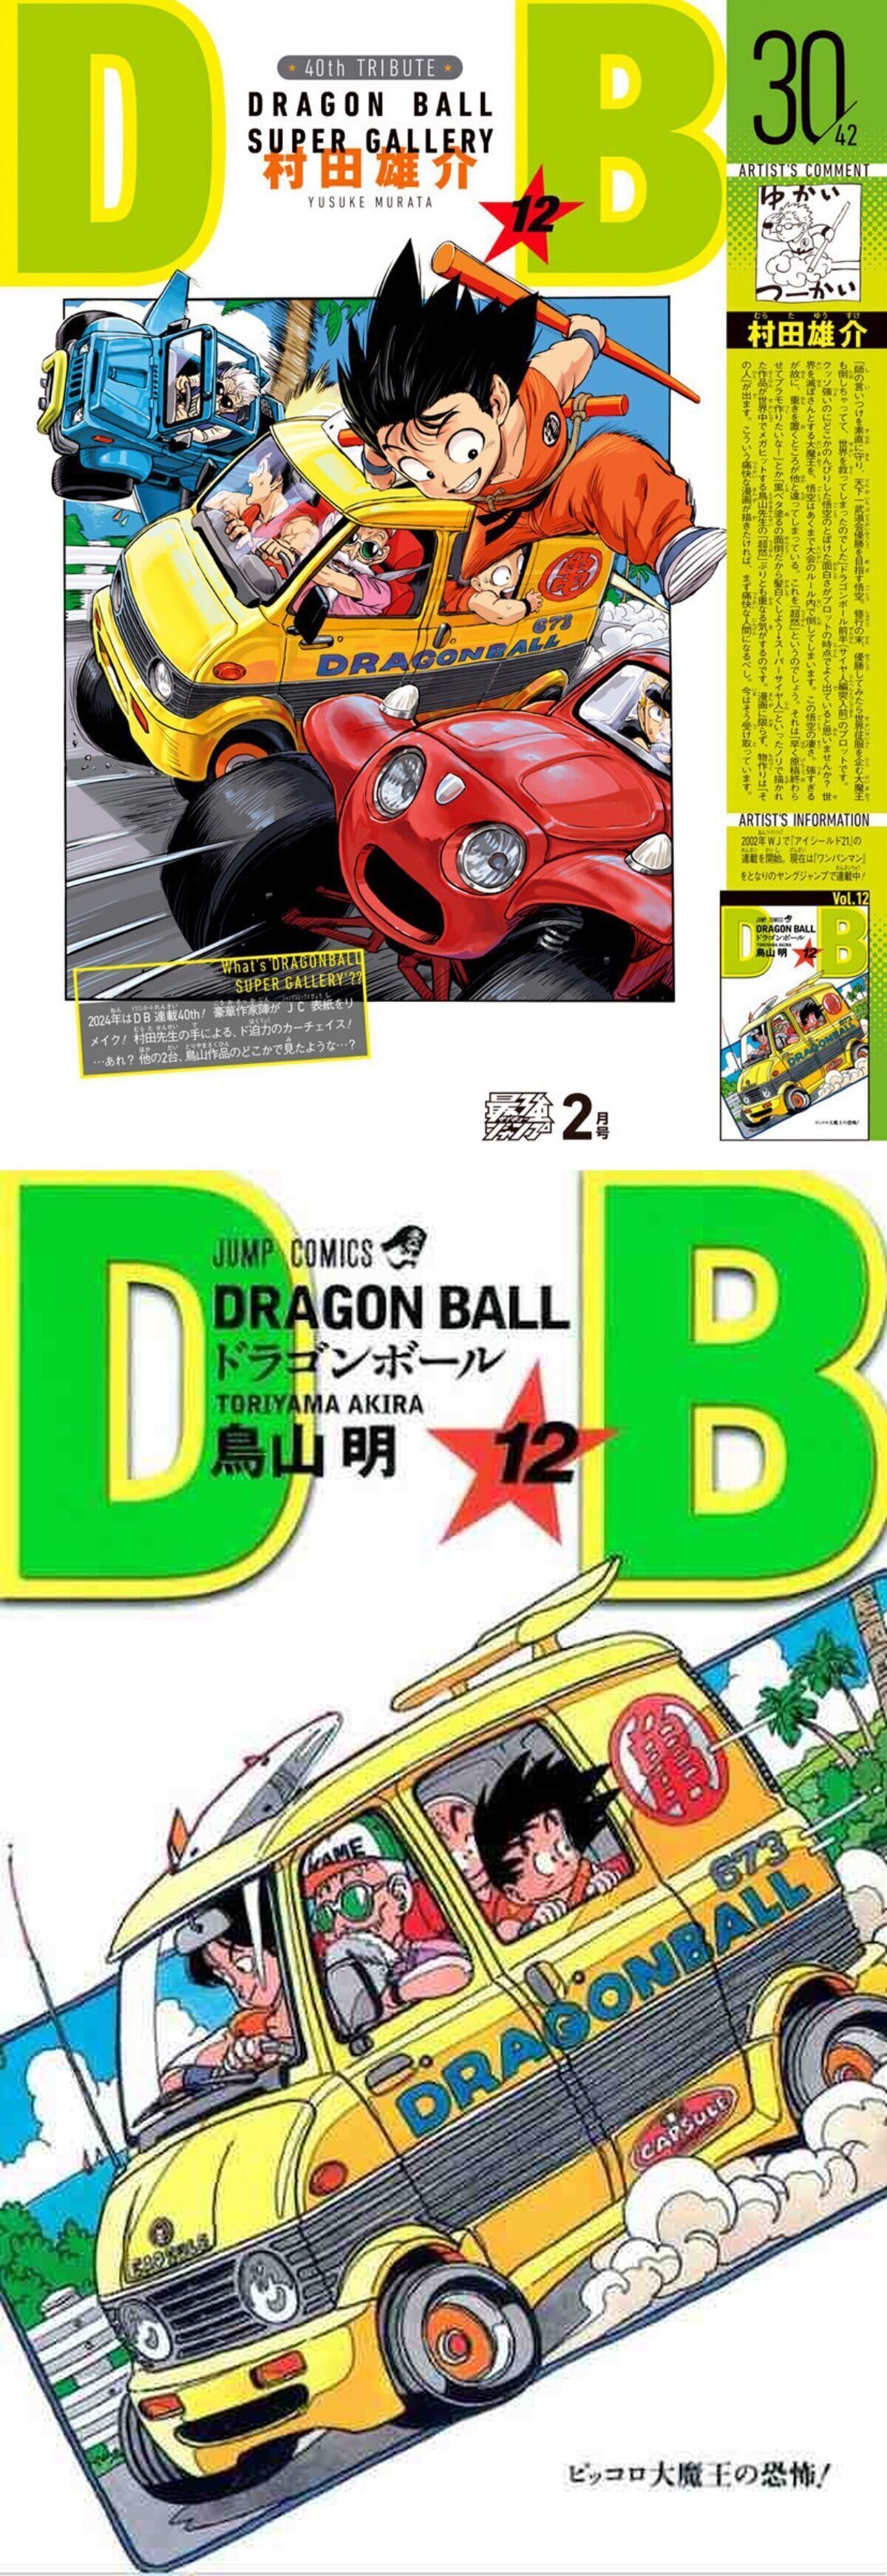 Nueva portada redibujada de ‘Dragon Ball’ este mes por Yûsuke Murata El excelente dibujante de ‘One Punch Man’ o ‘Eyeshield 21’